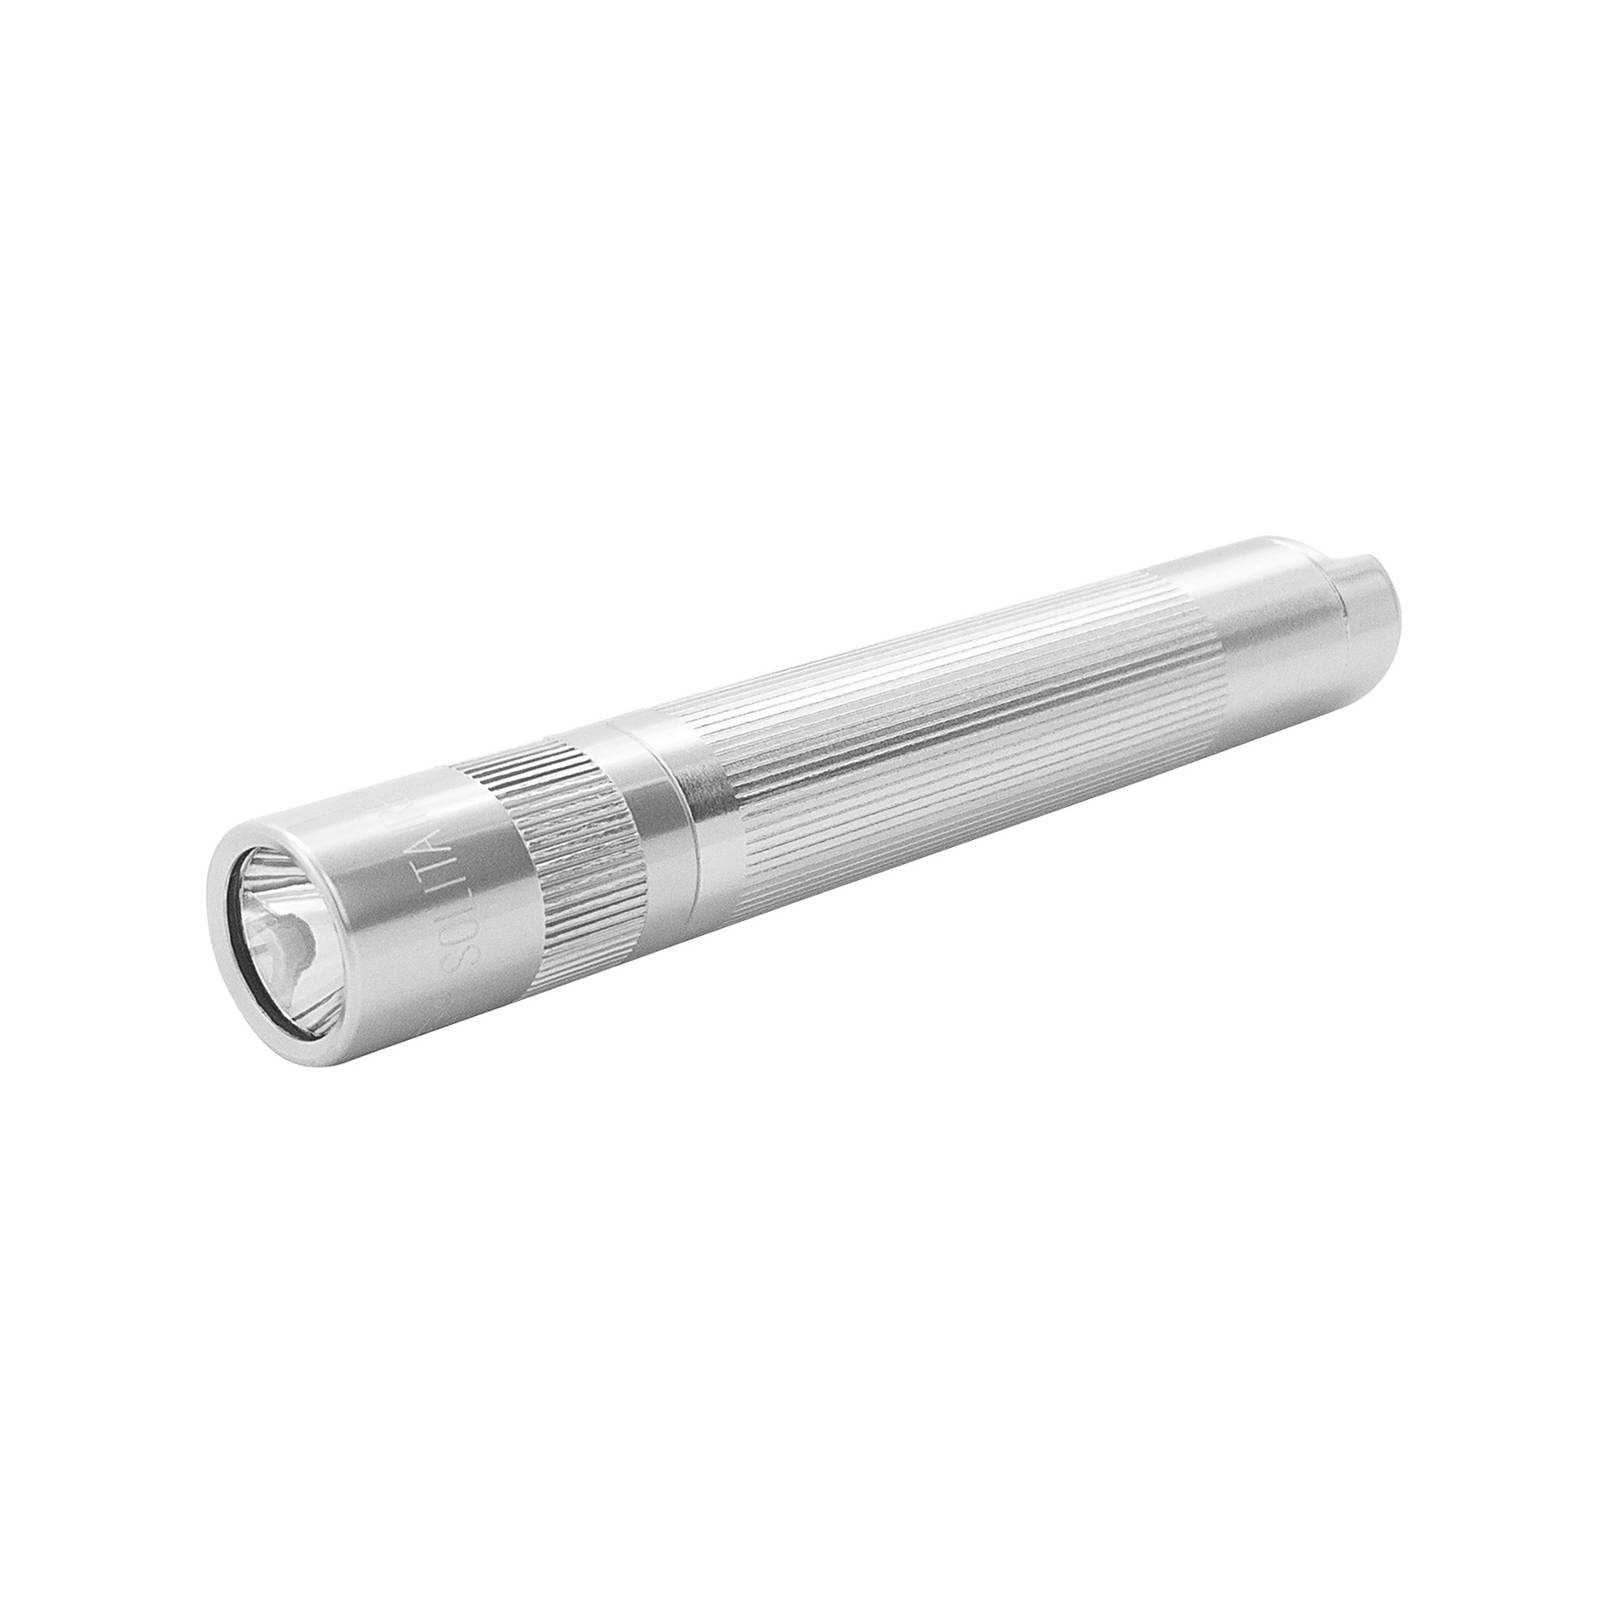 Maglite LED-Taschenlampe Solitaire, 1-Cell AAA, silber von Maglite